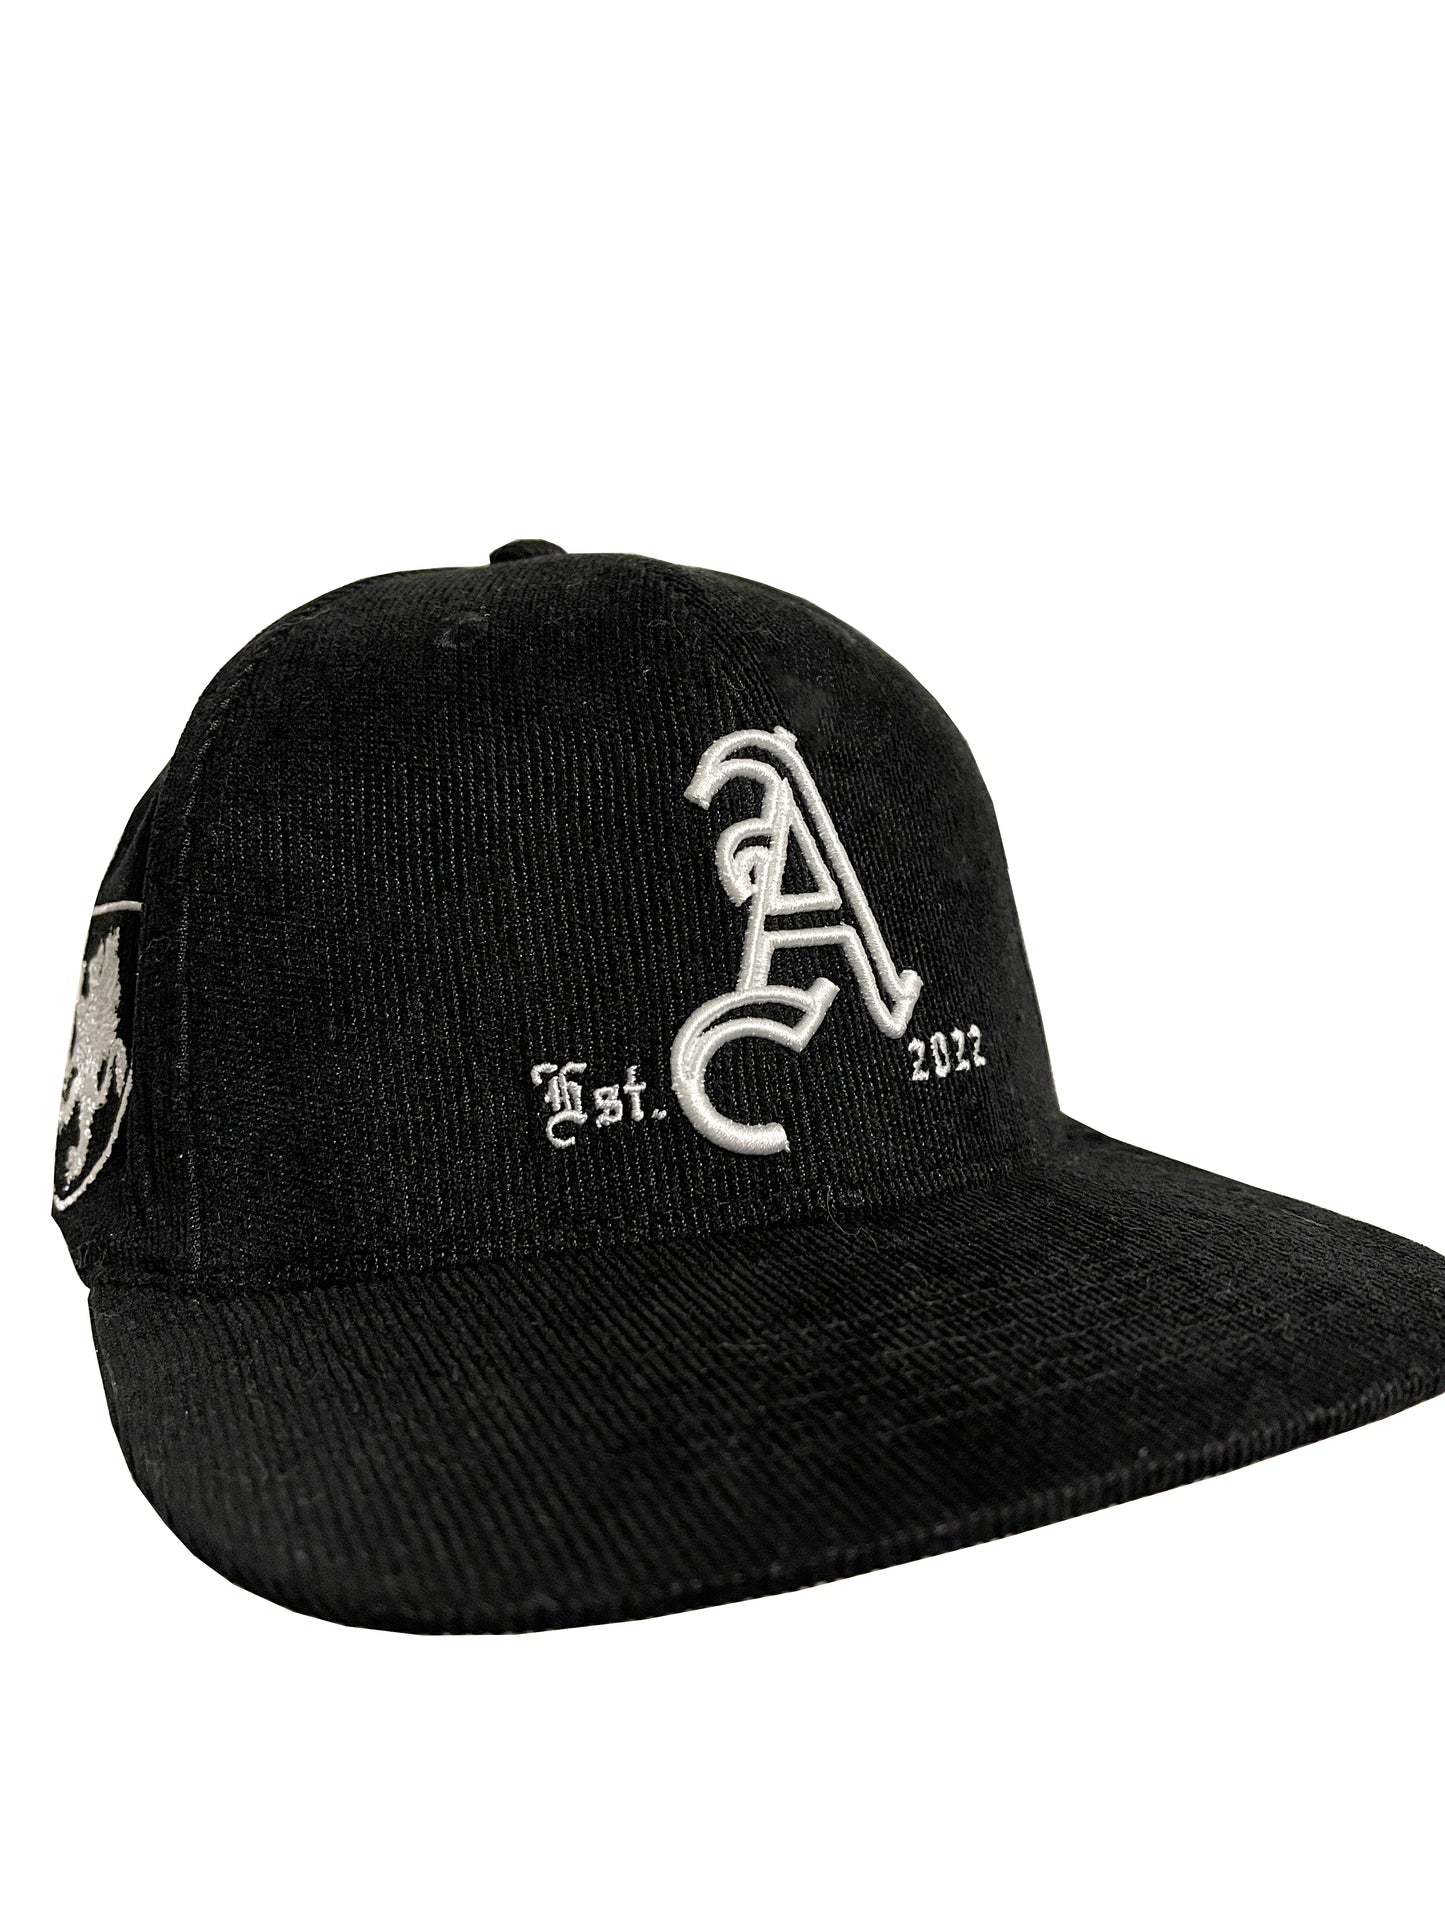 'A' Established Corduroy Hats